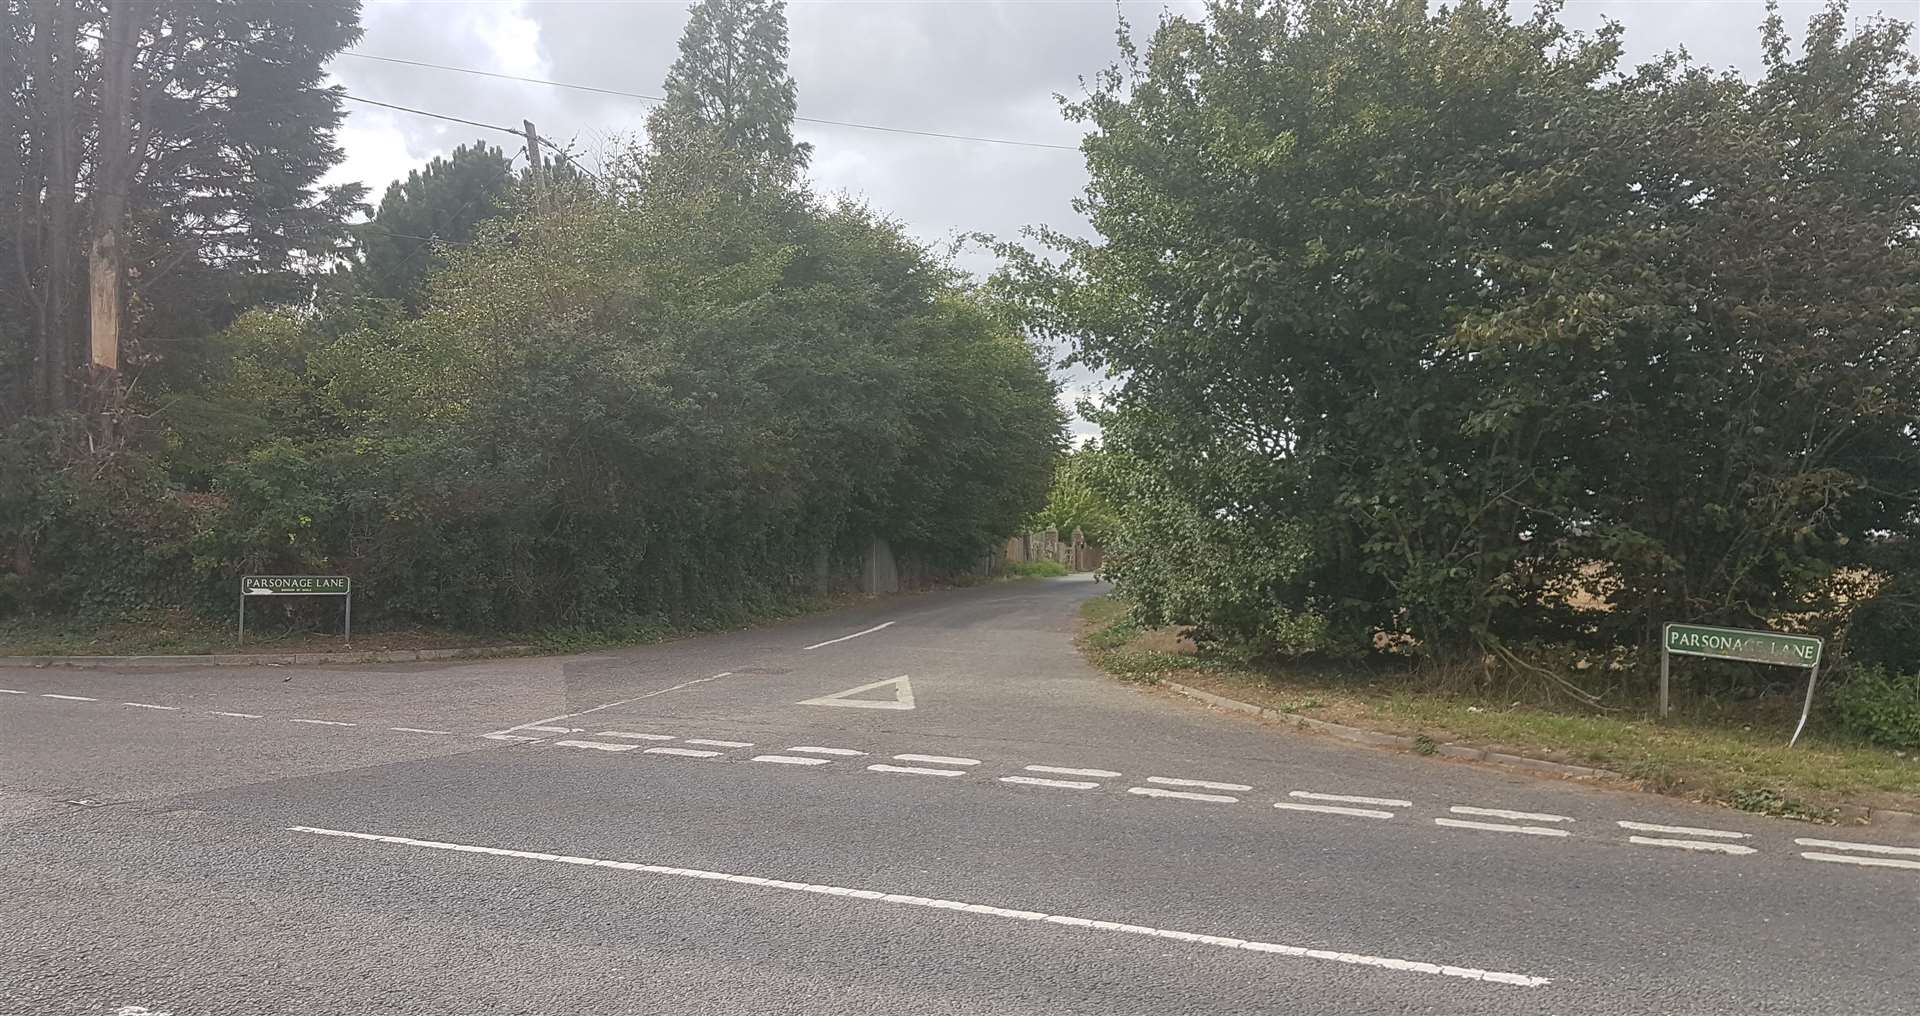 Parsonage Lane in Bobbing, near Sittingbourne, where two girls were hit by a fallen tree